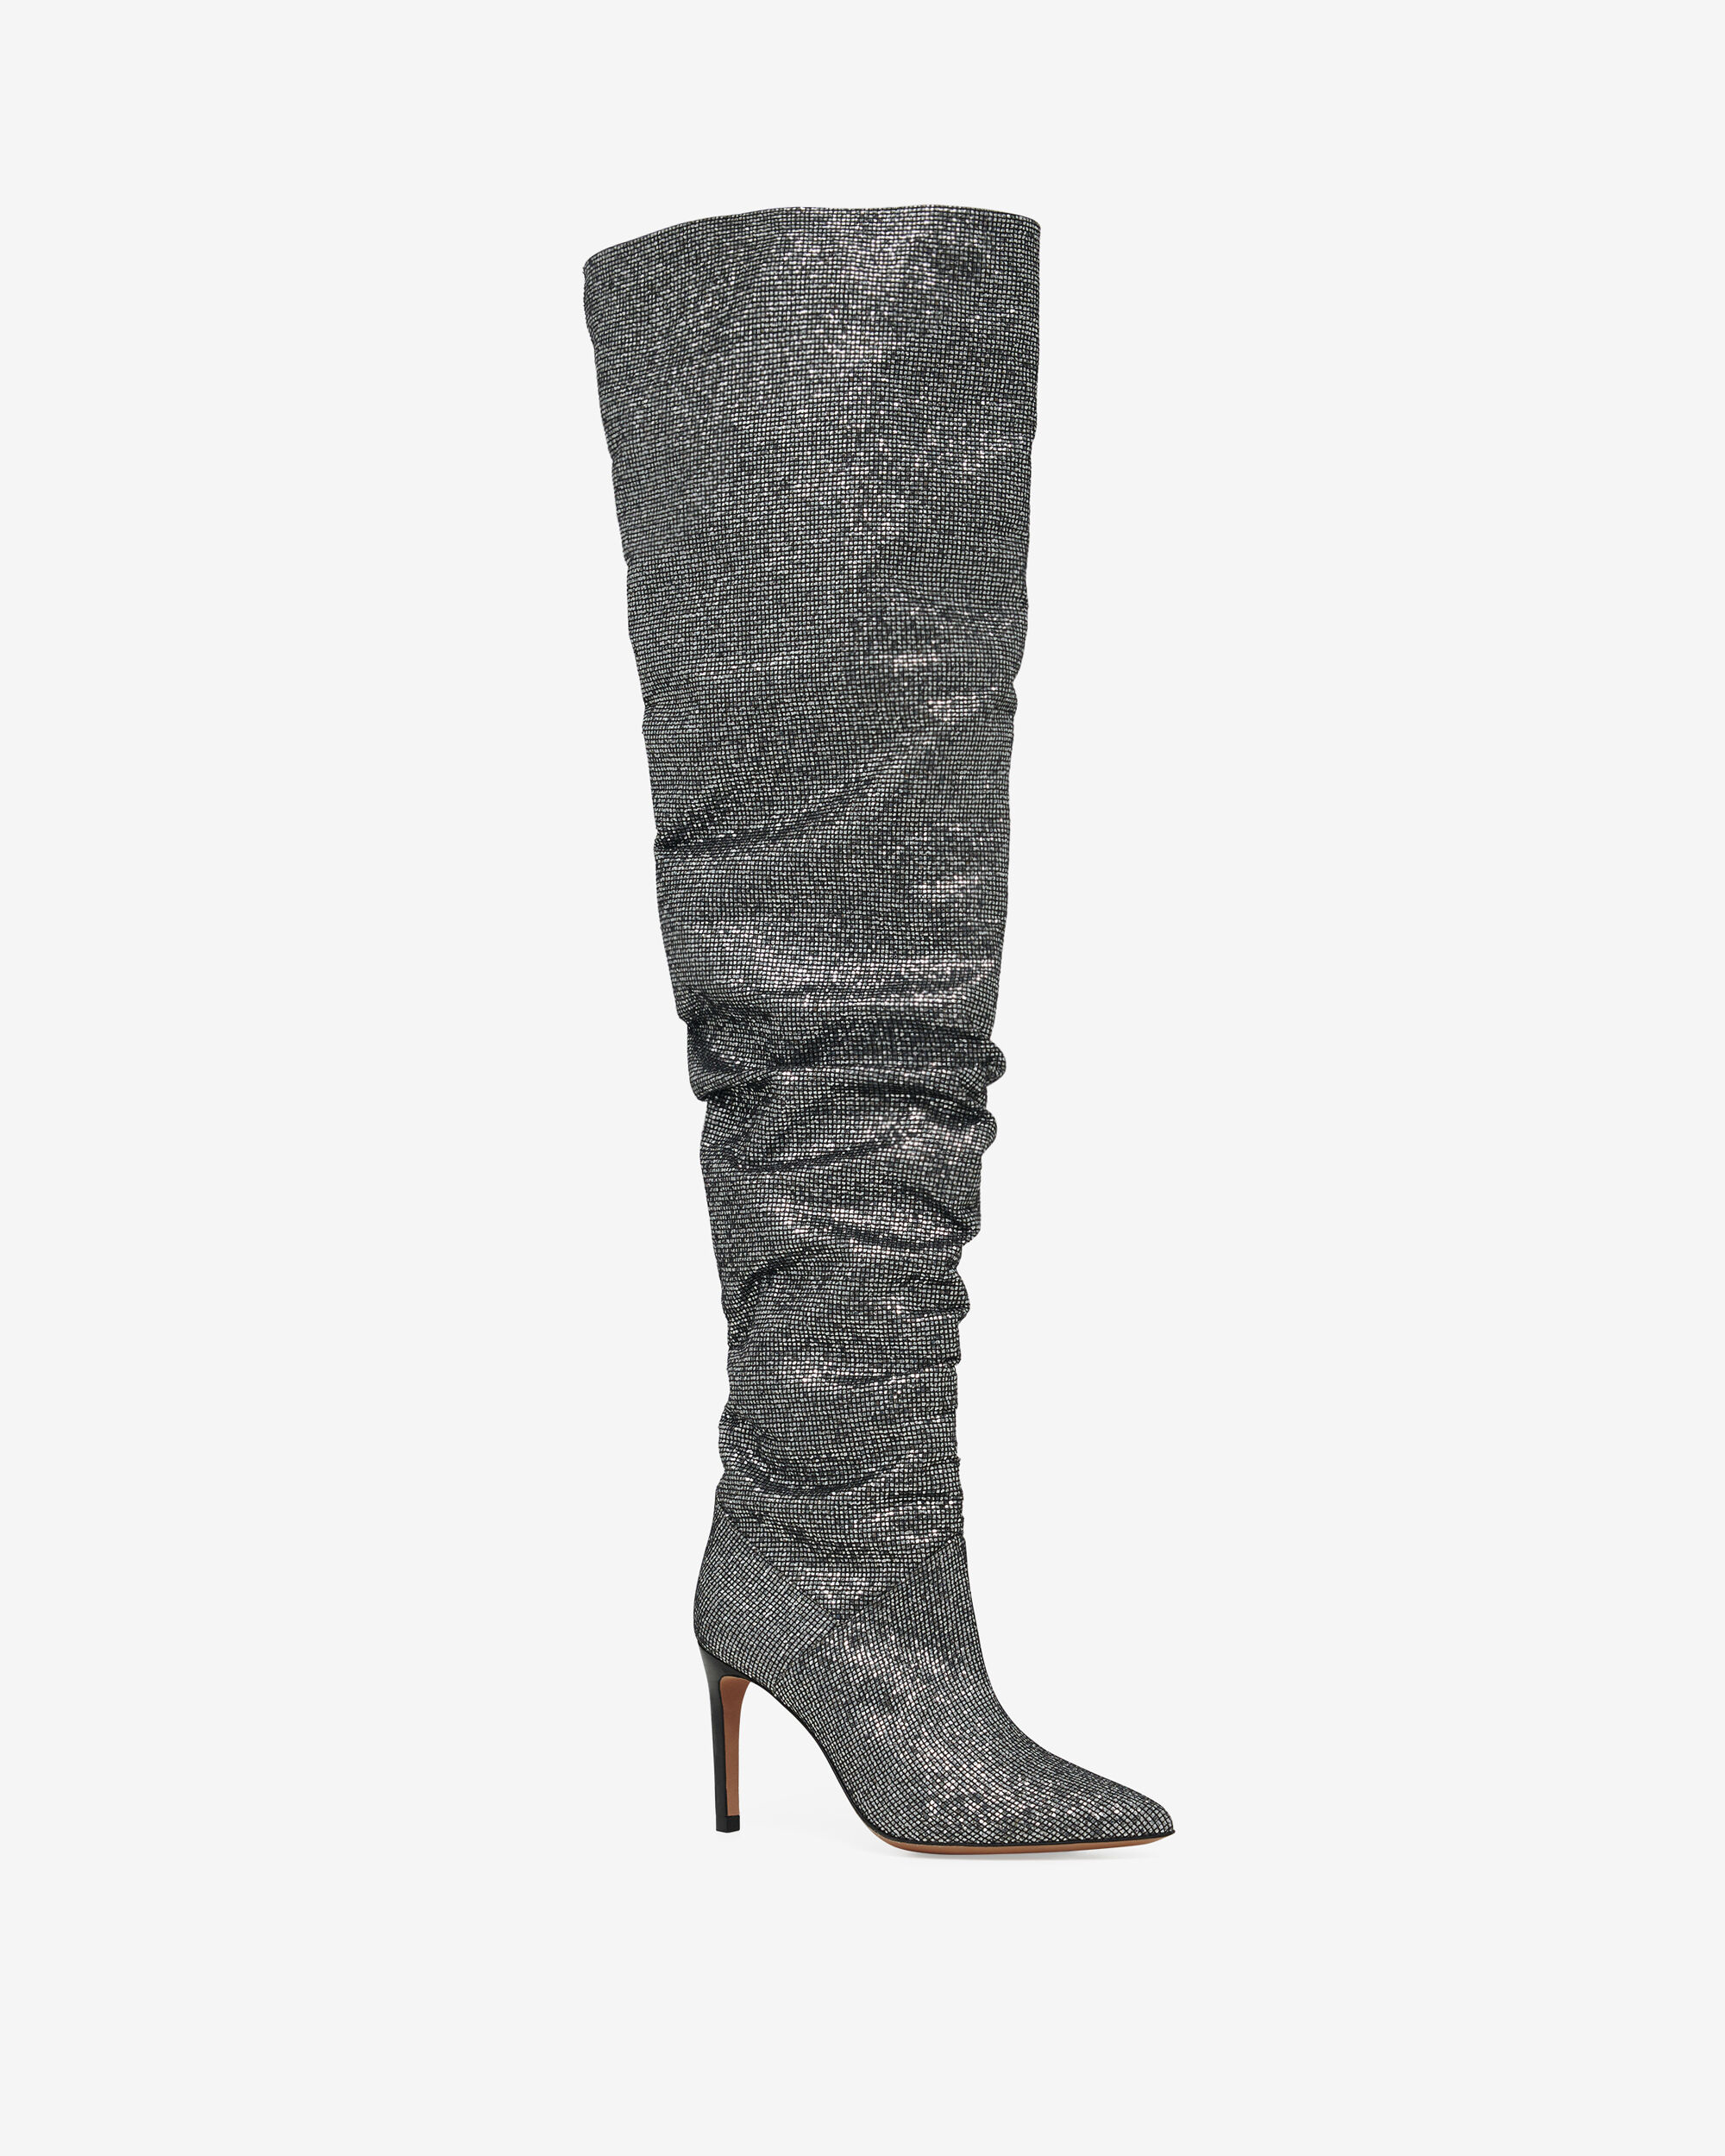 Shoedazzle Lekisha Thigh High Silver Sparkle Boots Taylor Swift Concert  movie | eBay